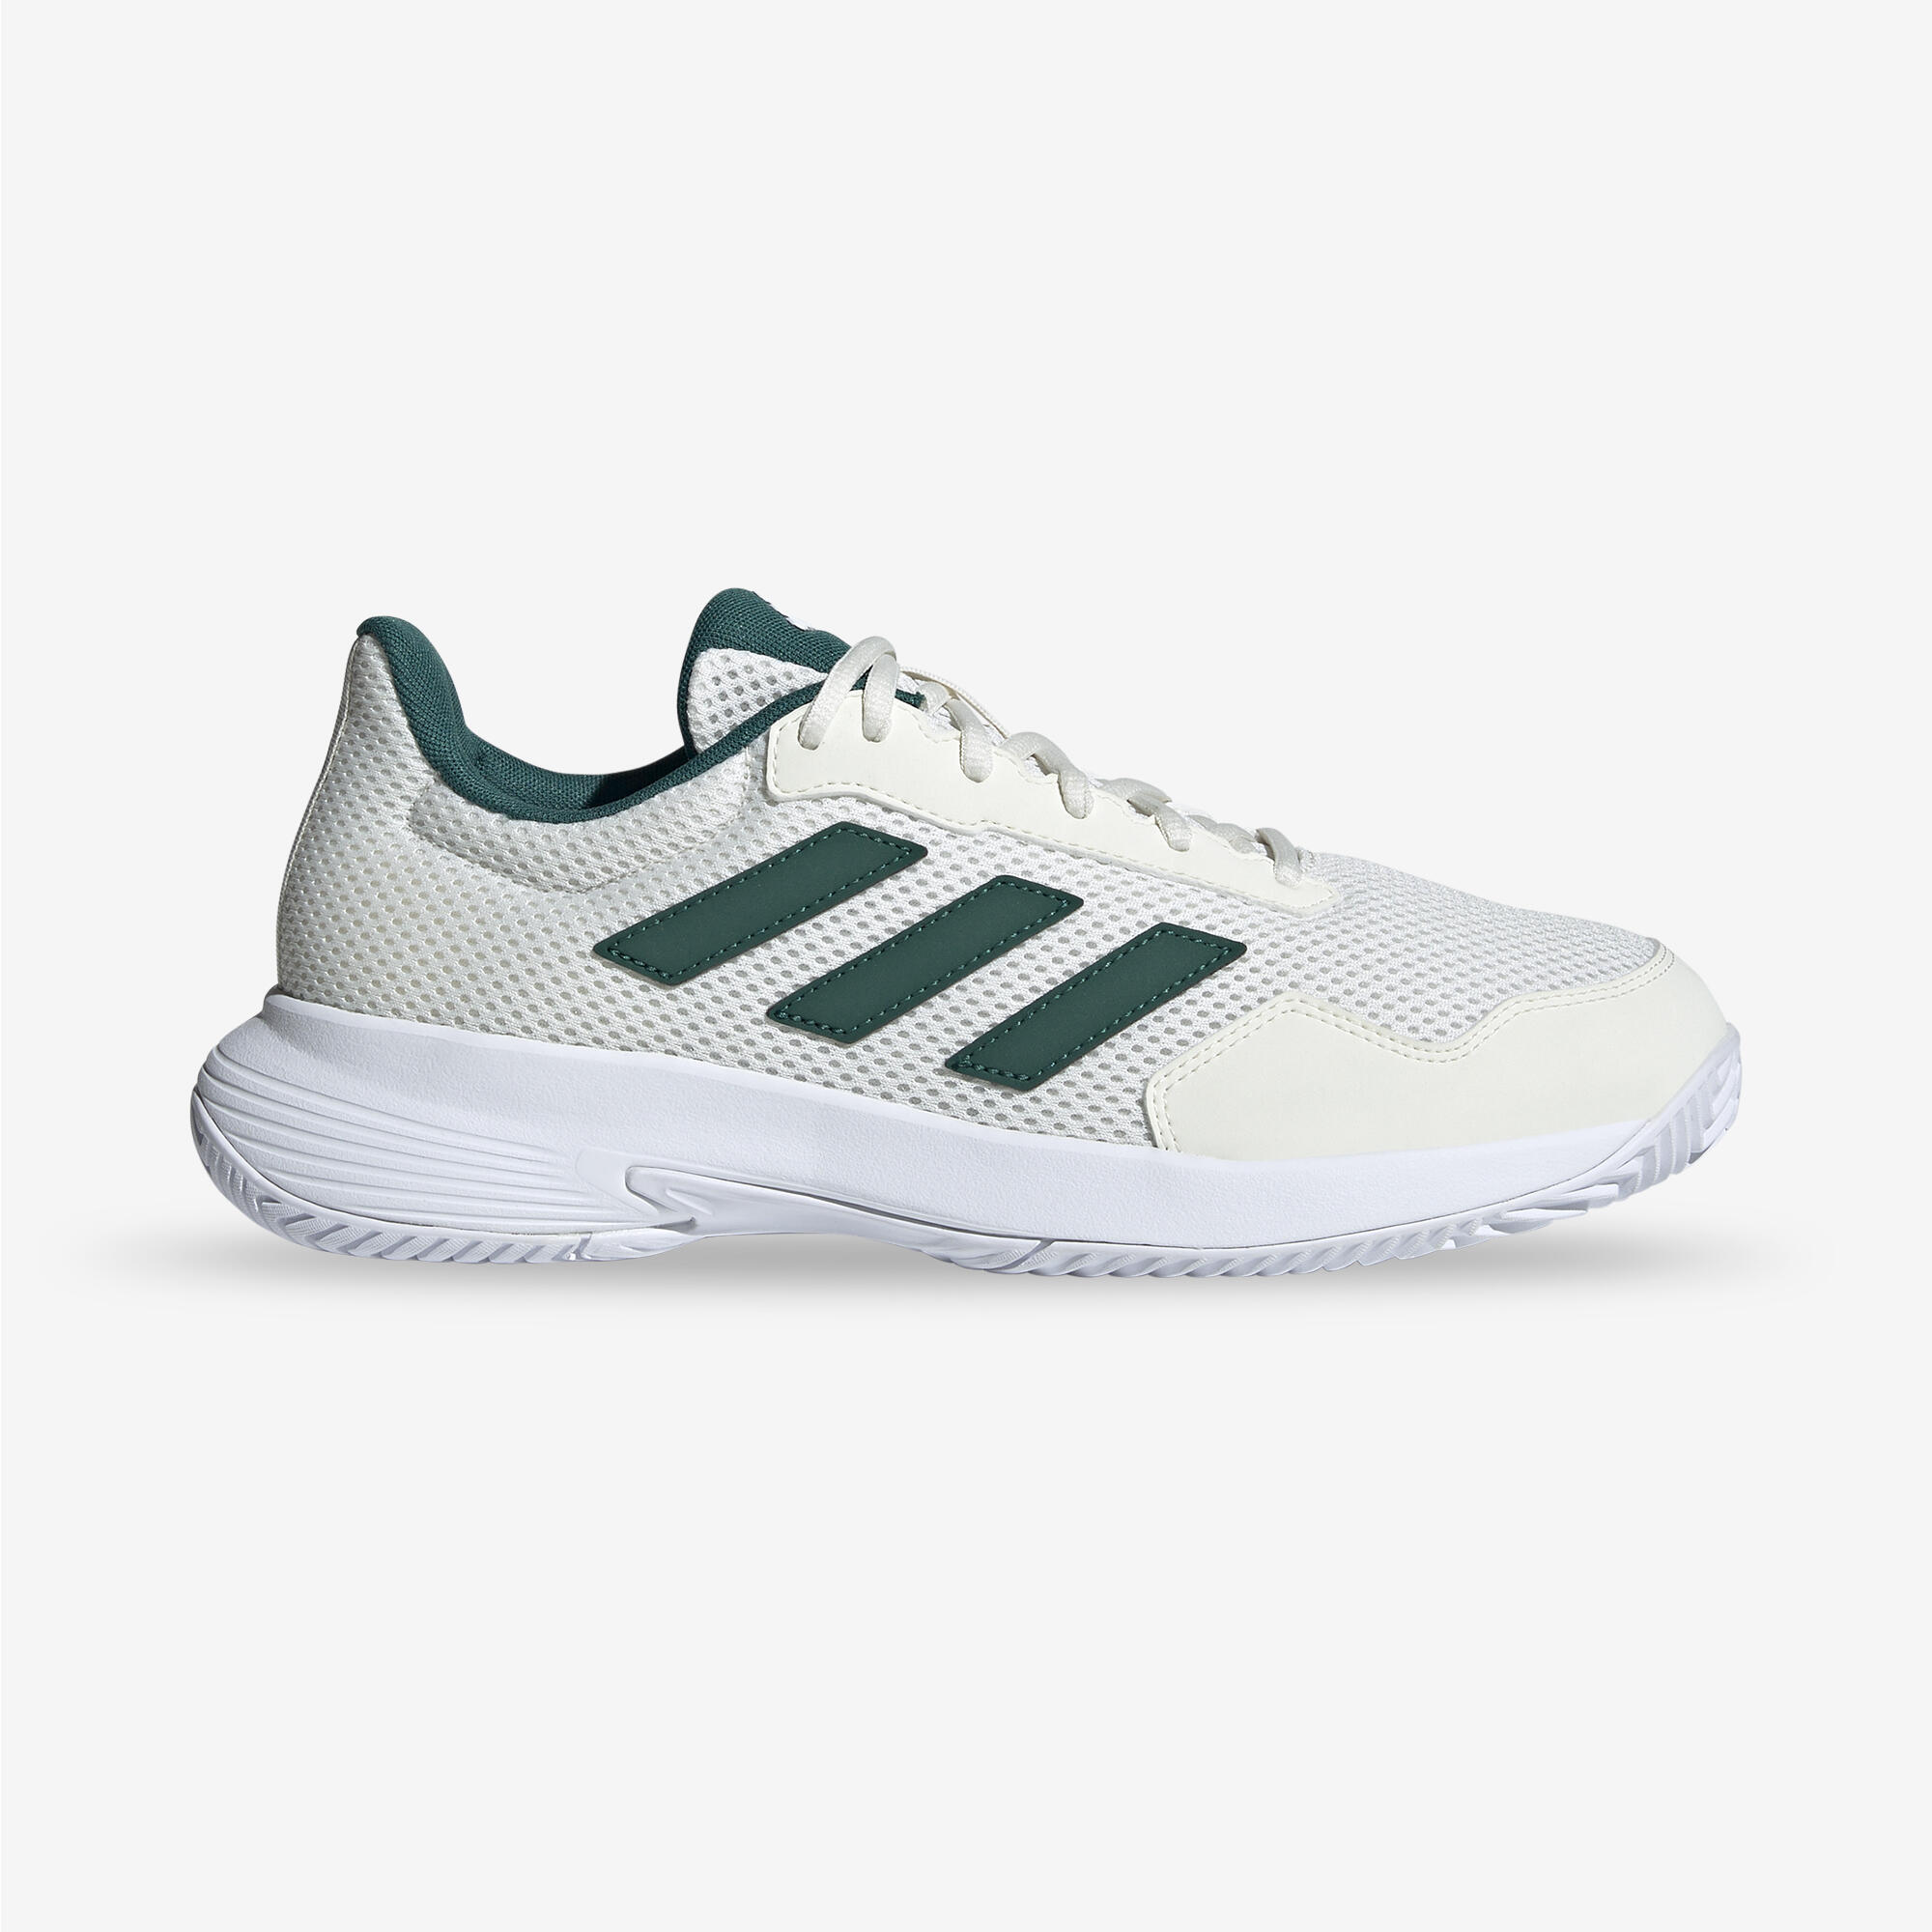 Men's Multicourt Tennis Shoes Gamespec - White/Green 1/7